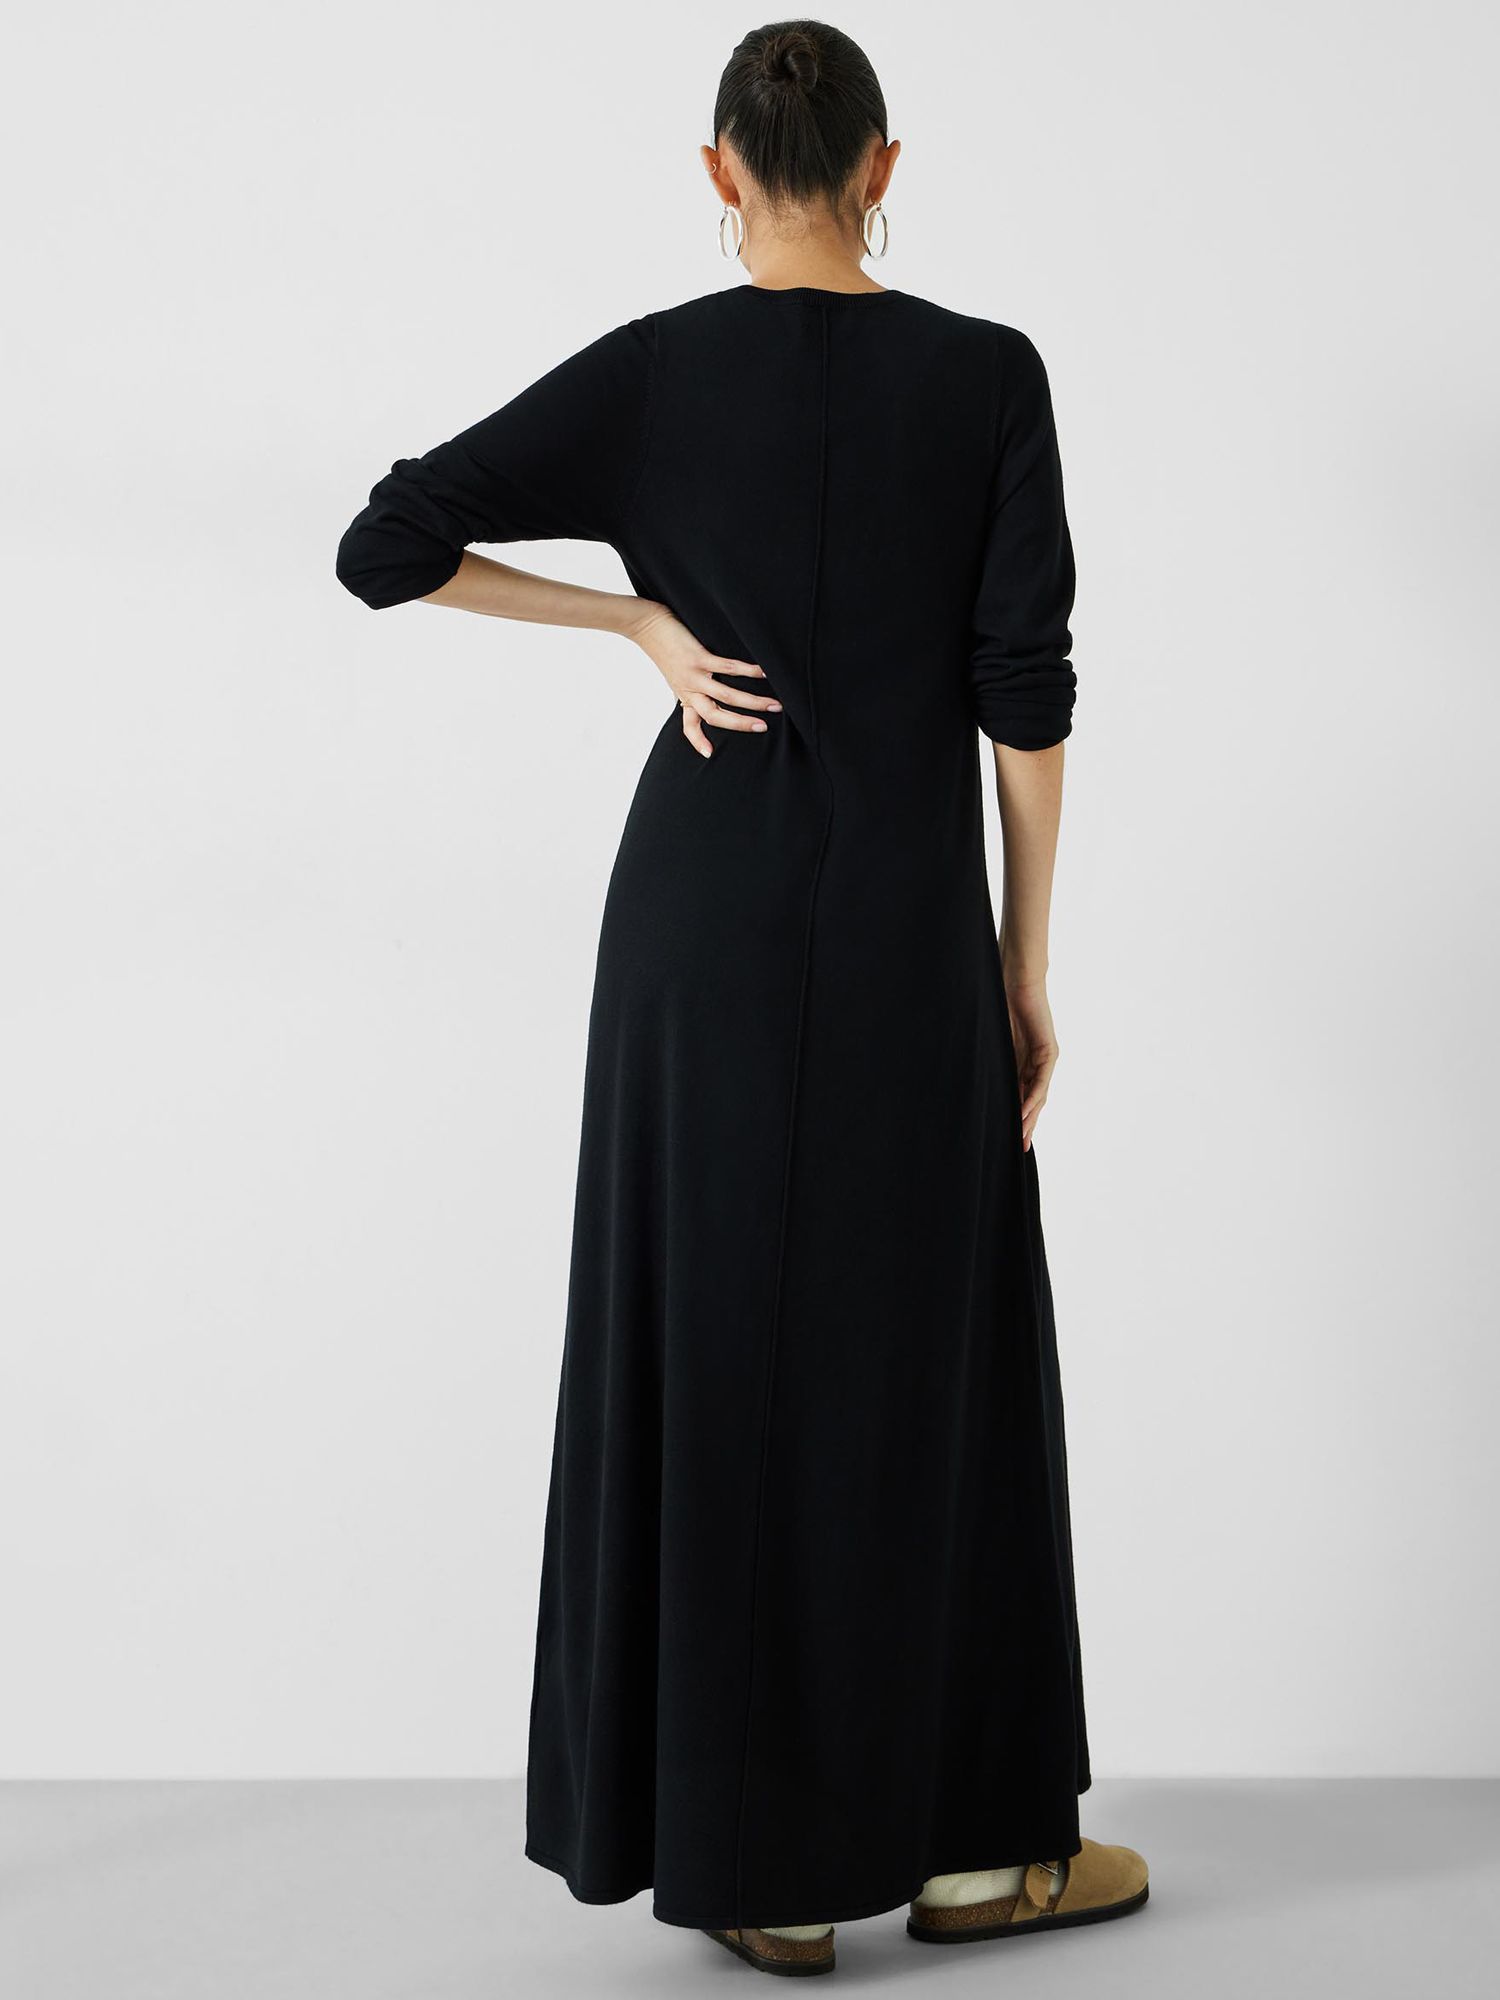 HUSH Talen Crew Knitted Dress, Black at John Lewis & Partners